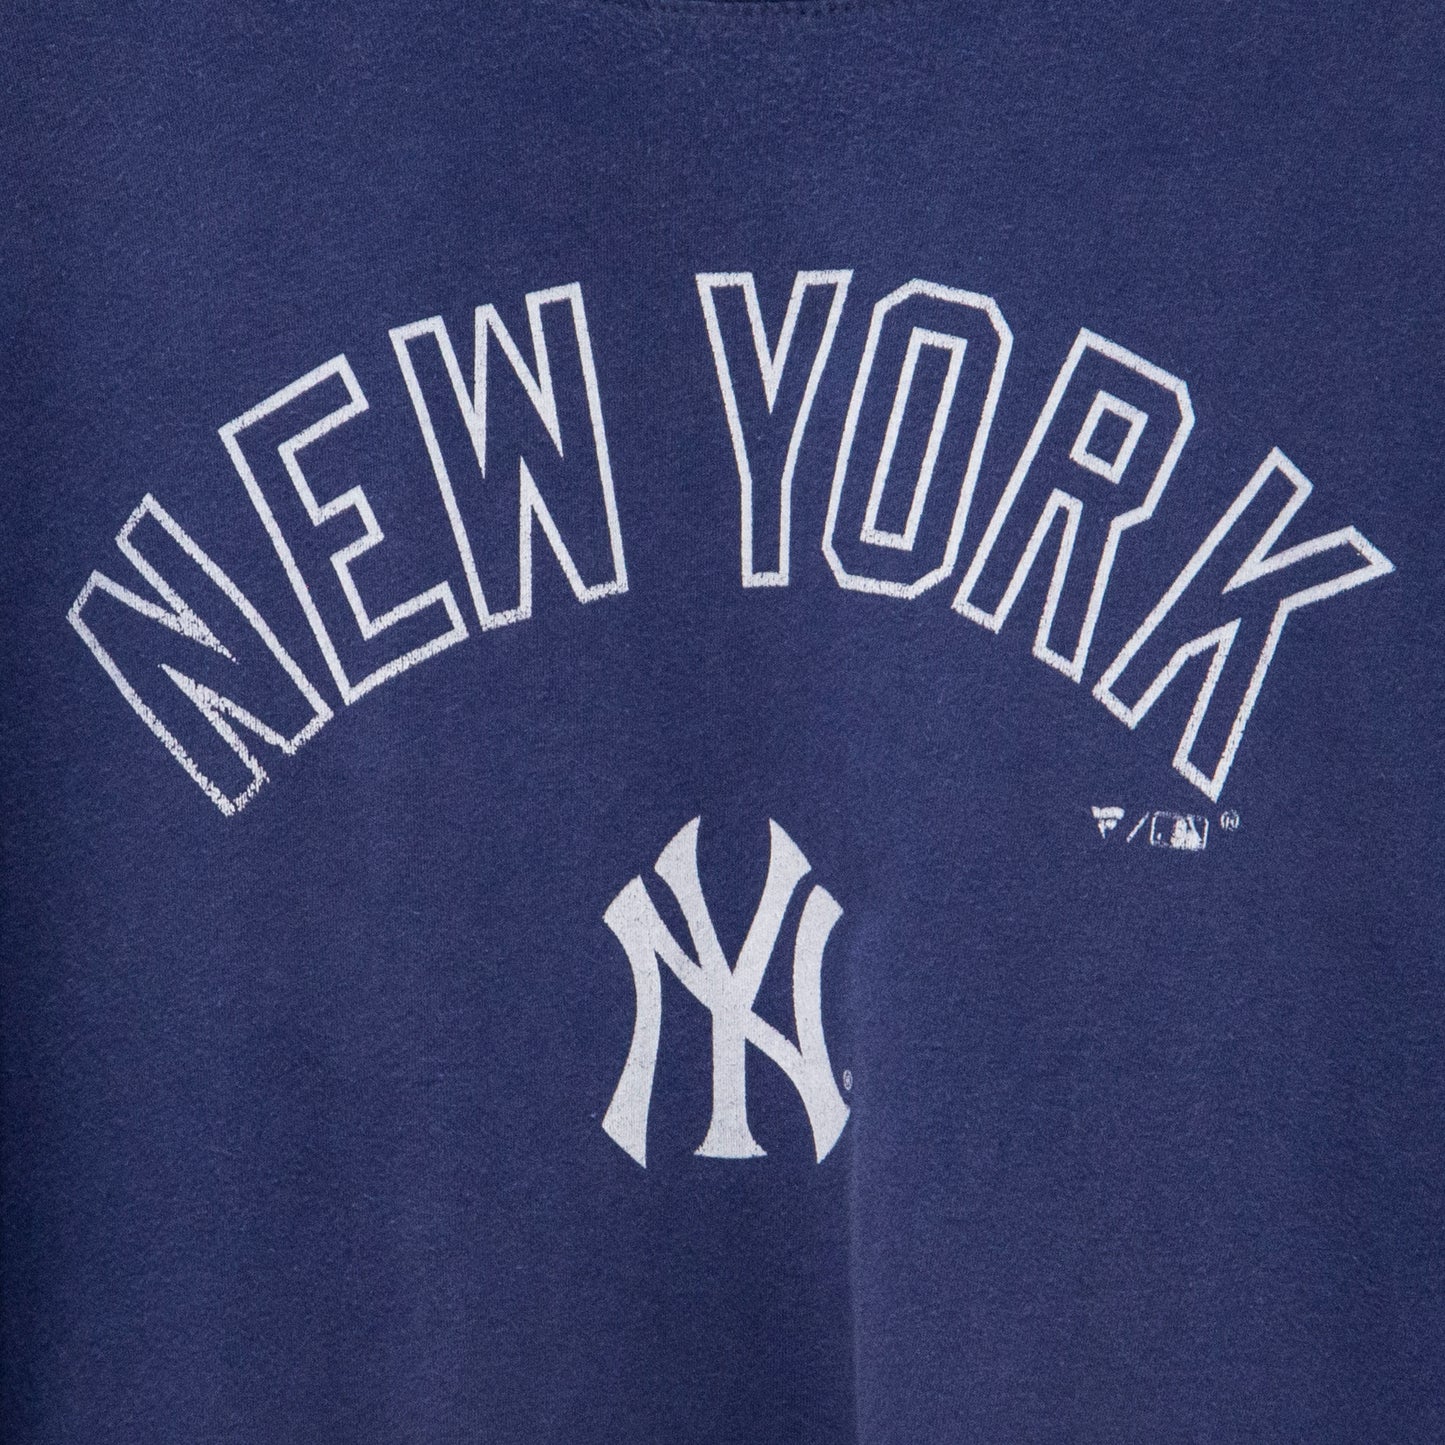 Vintage New York Yankees T-Shirt 2XL